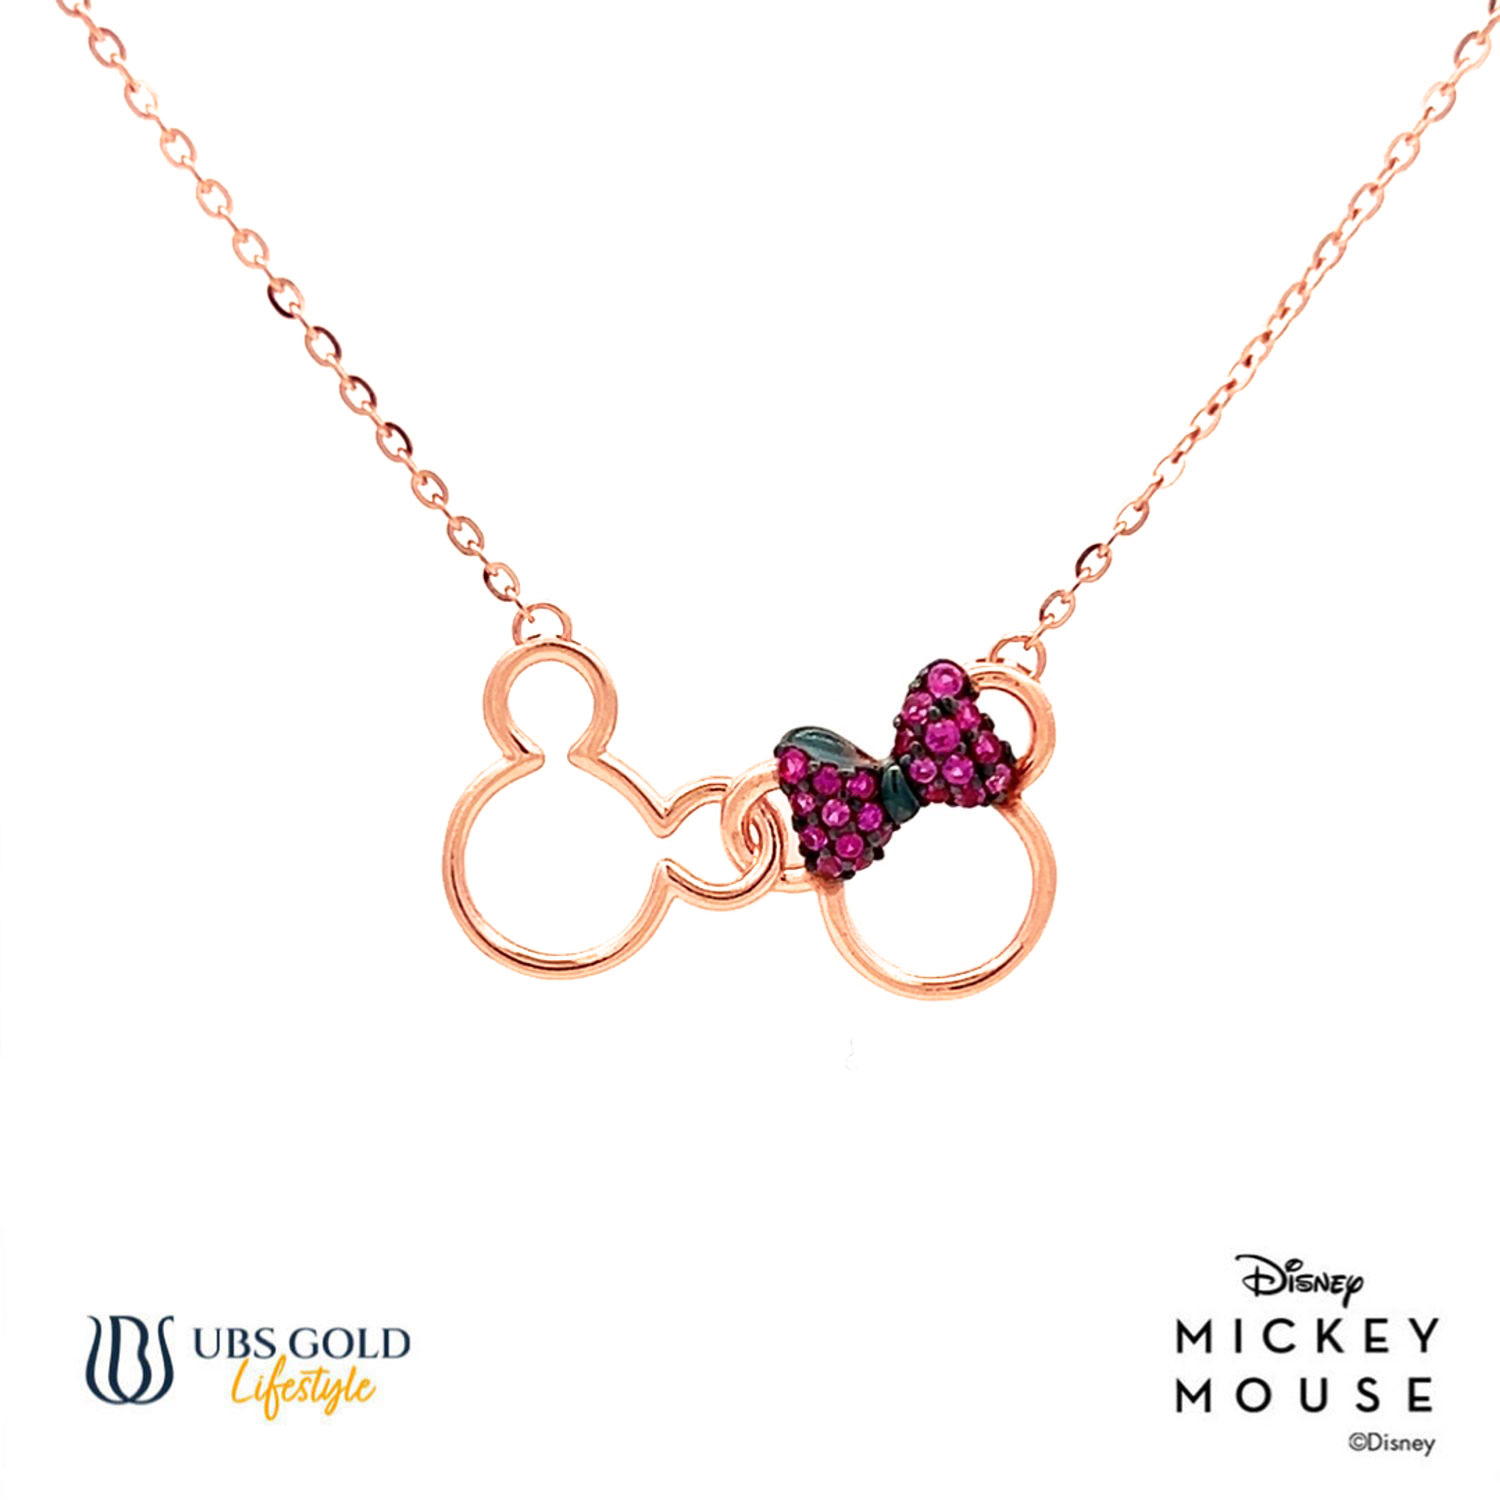 UBS Gold Kalung Emas Disney Mickey Minnie Mouse - Kky0500 - 17K